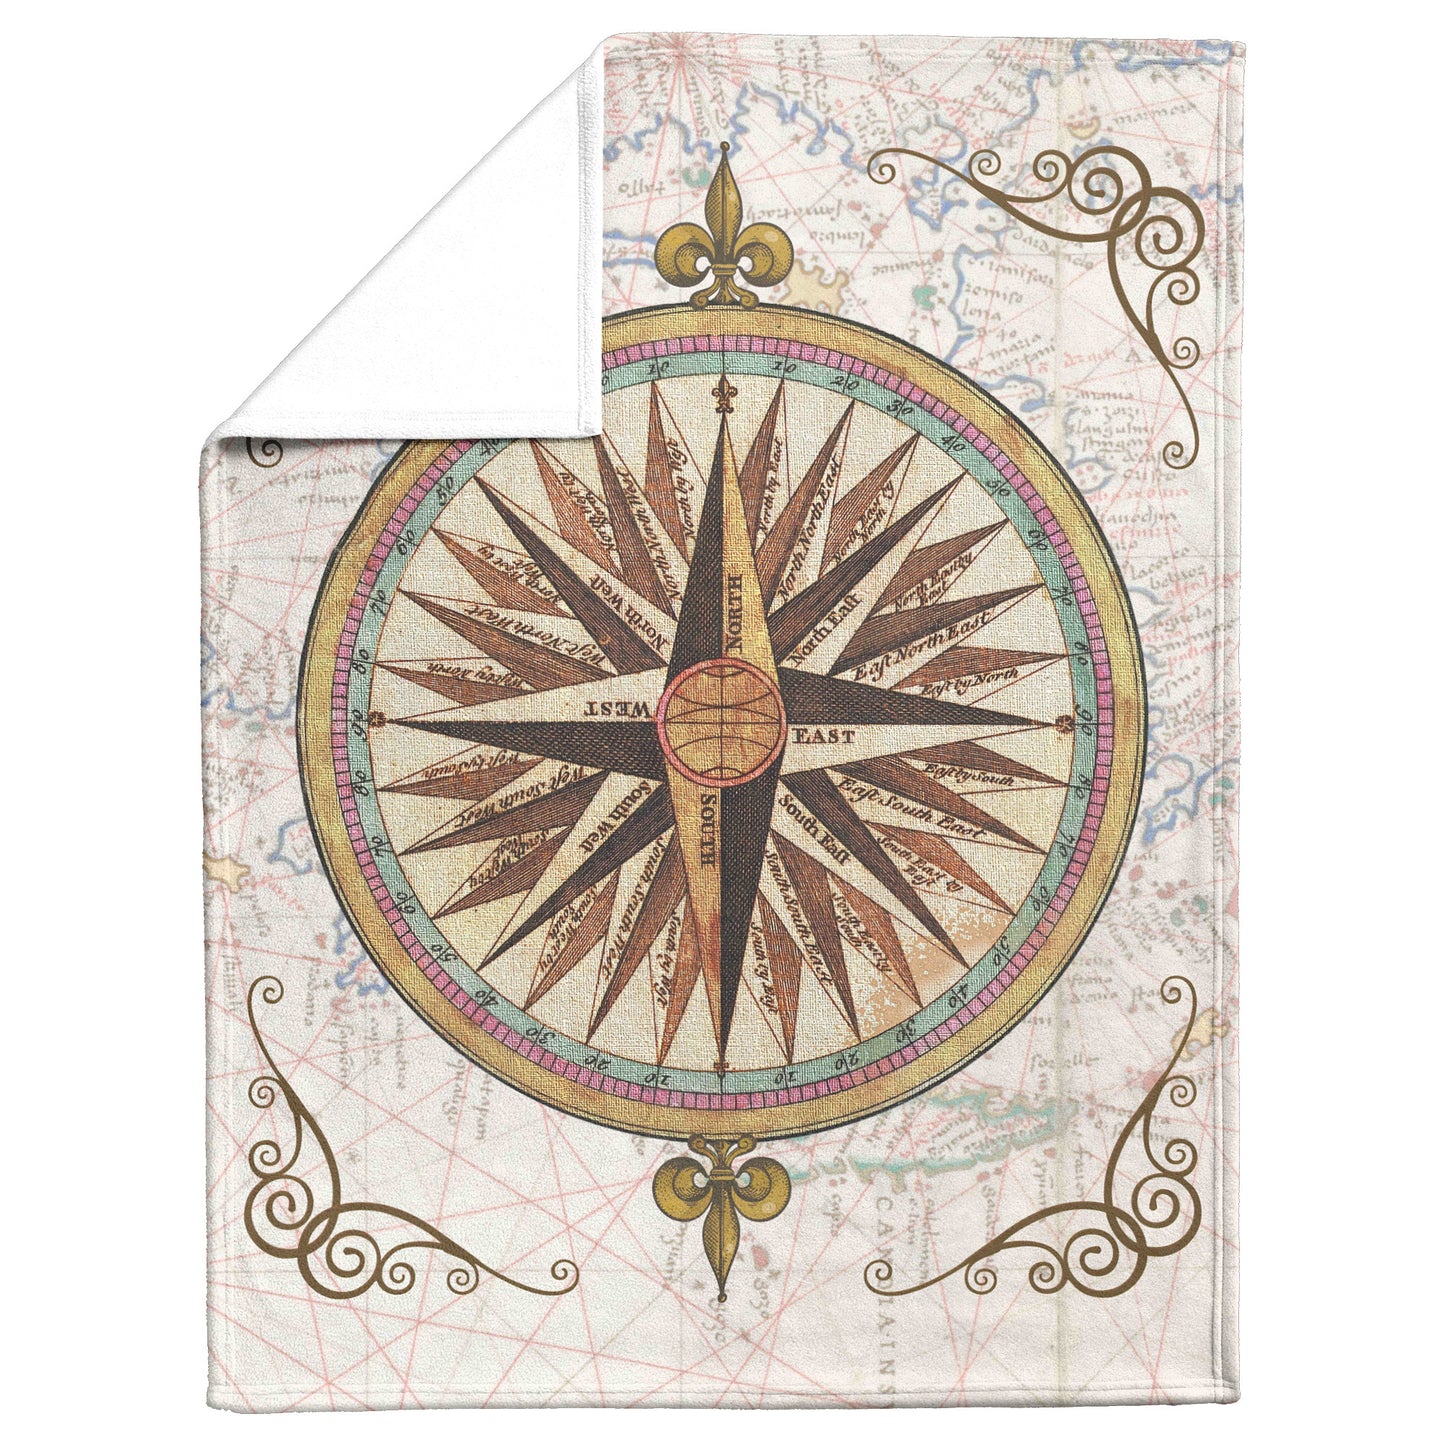 Compass Rose Fleece Blanket - Teal-Gold